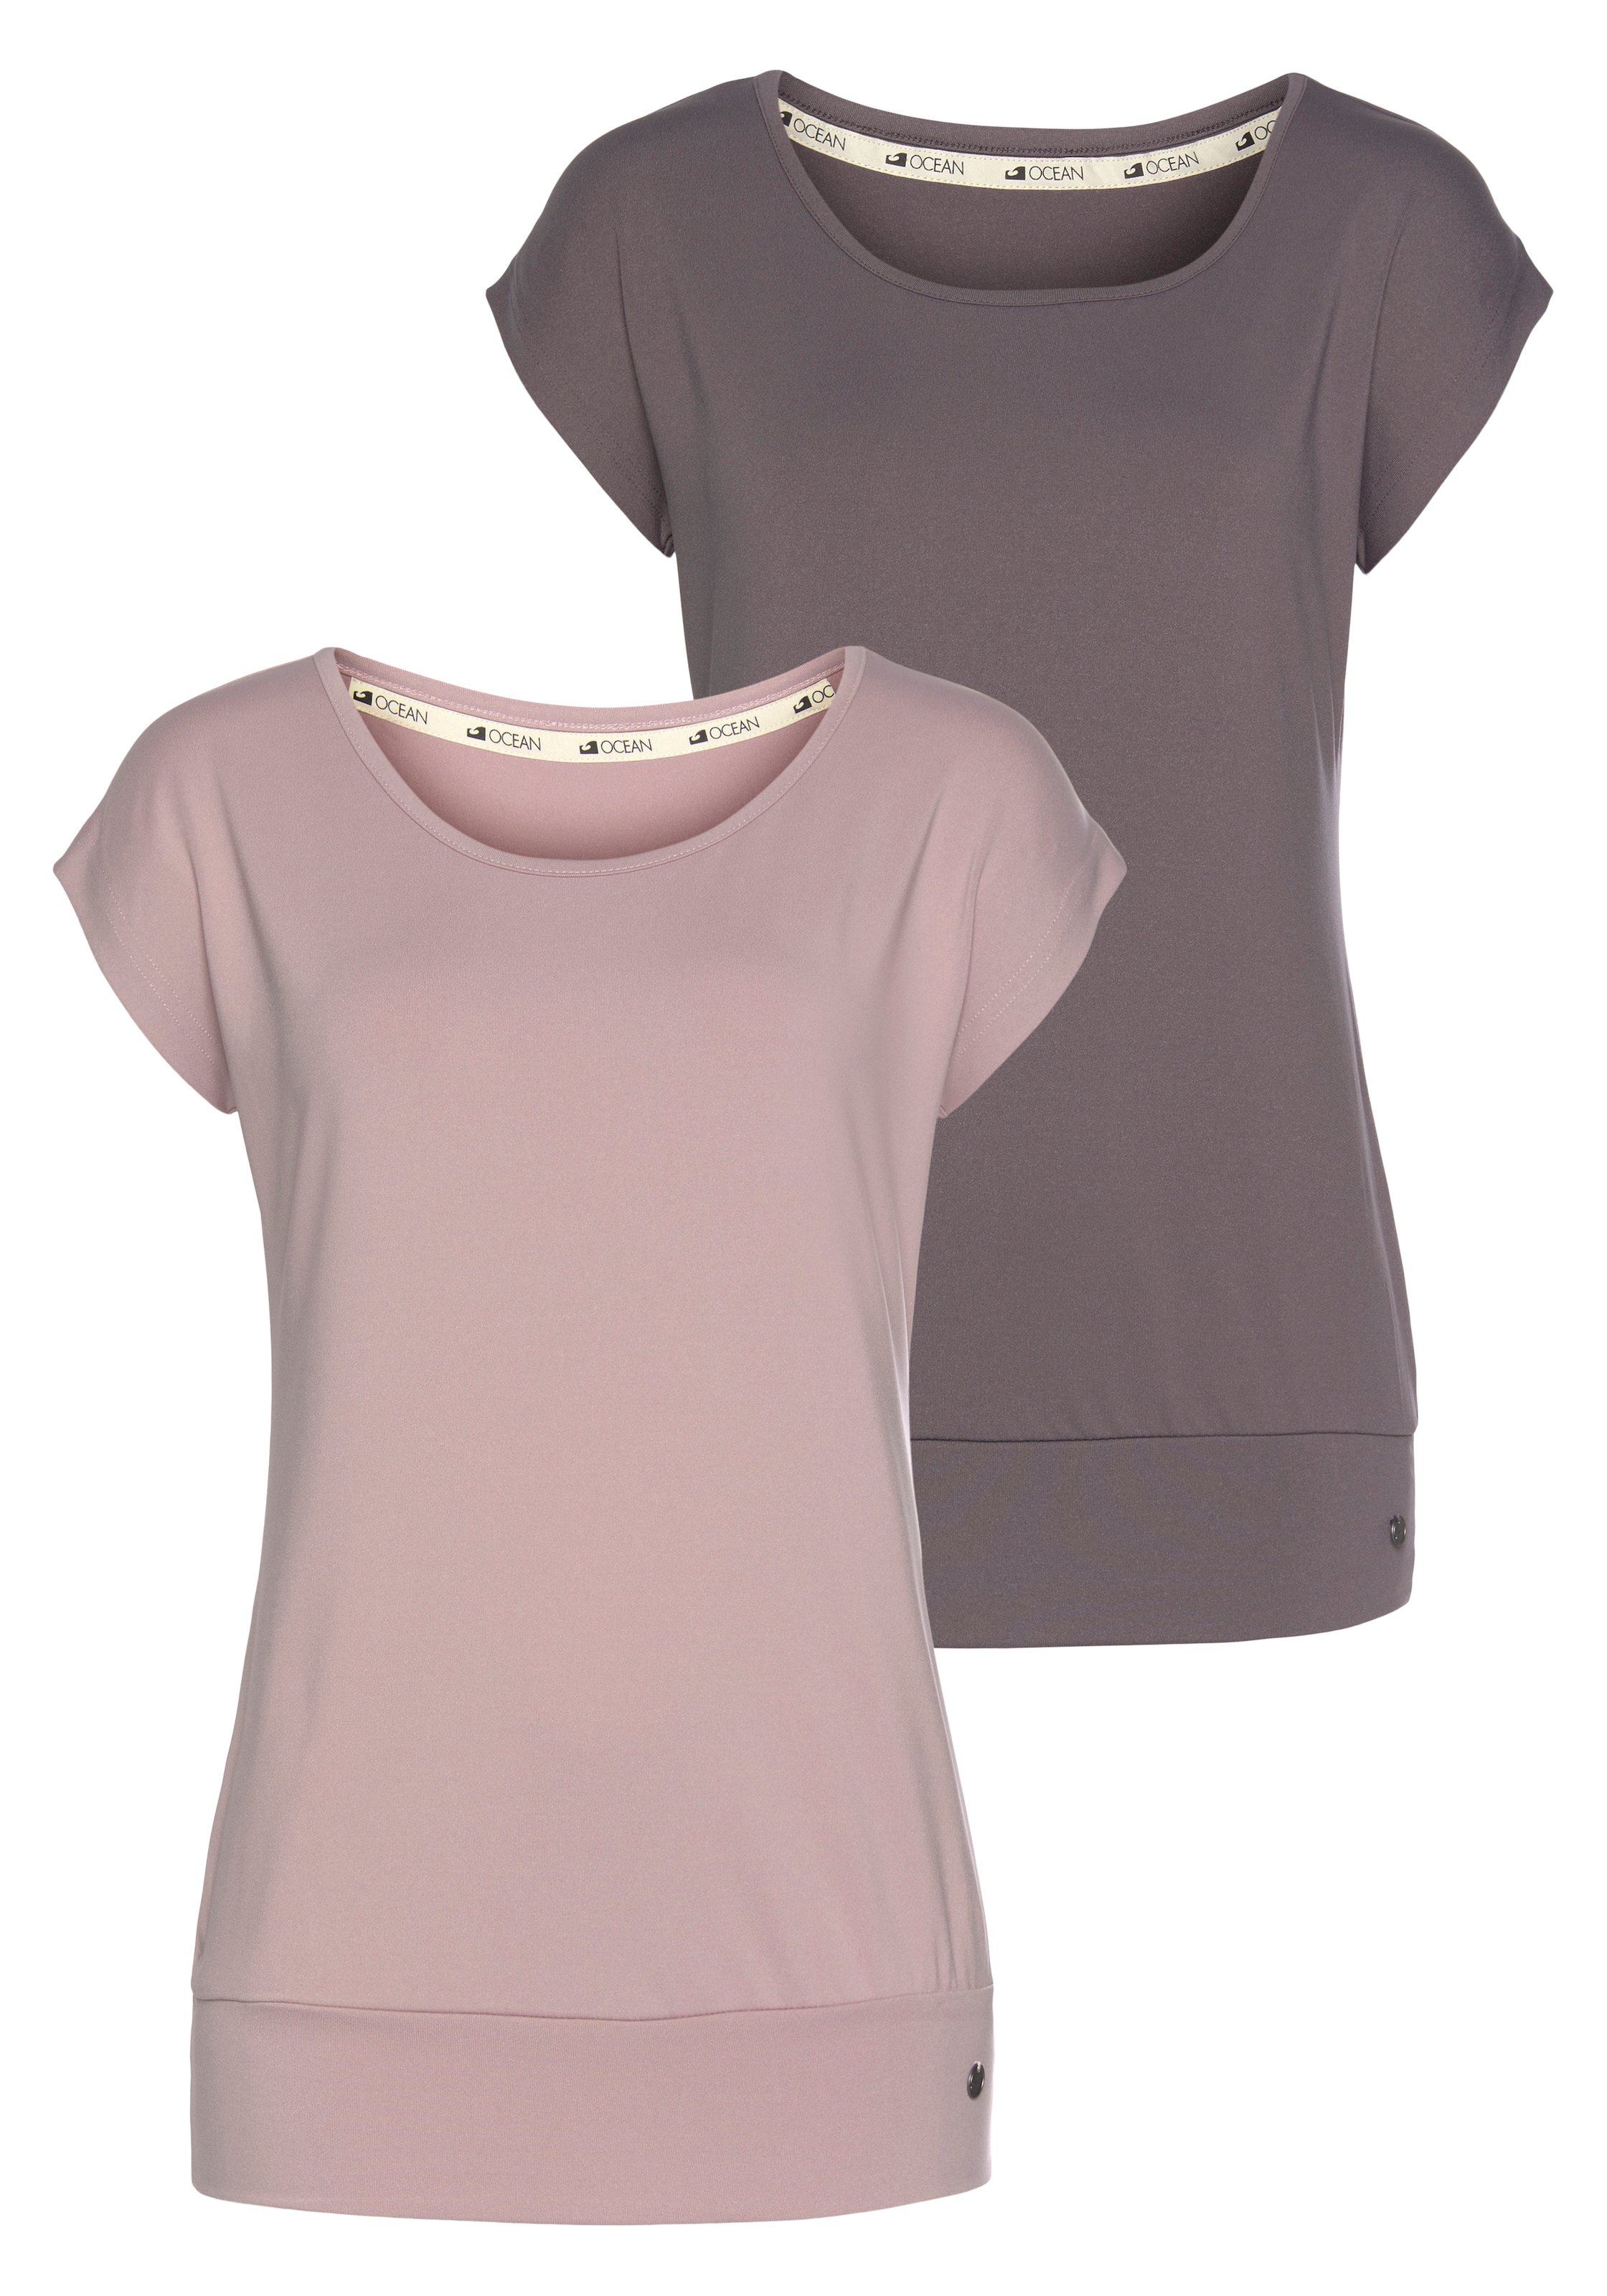 Ocean & OTTOversand Yoga Sportswear Shirts«, Essentials Yoga 2er-Pack) Shirt - Relax (Packung, bei »Soulwear